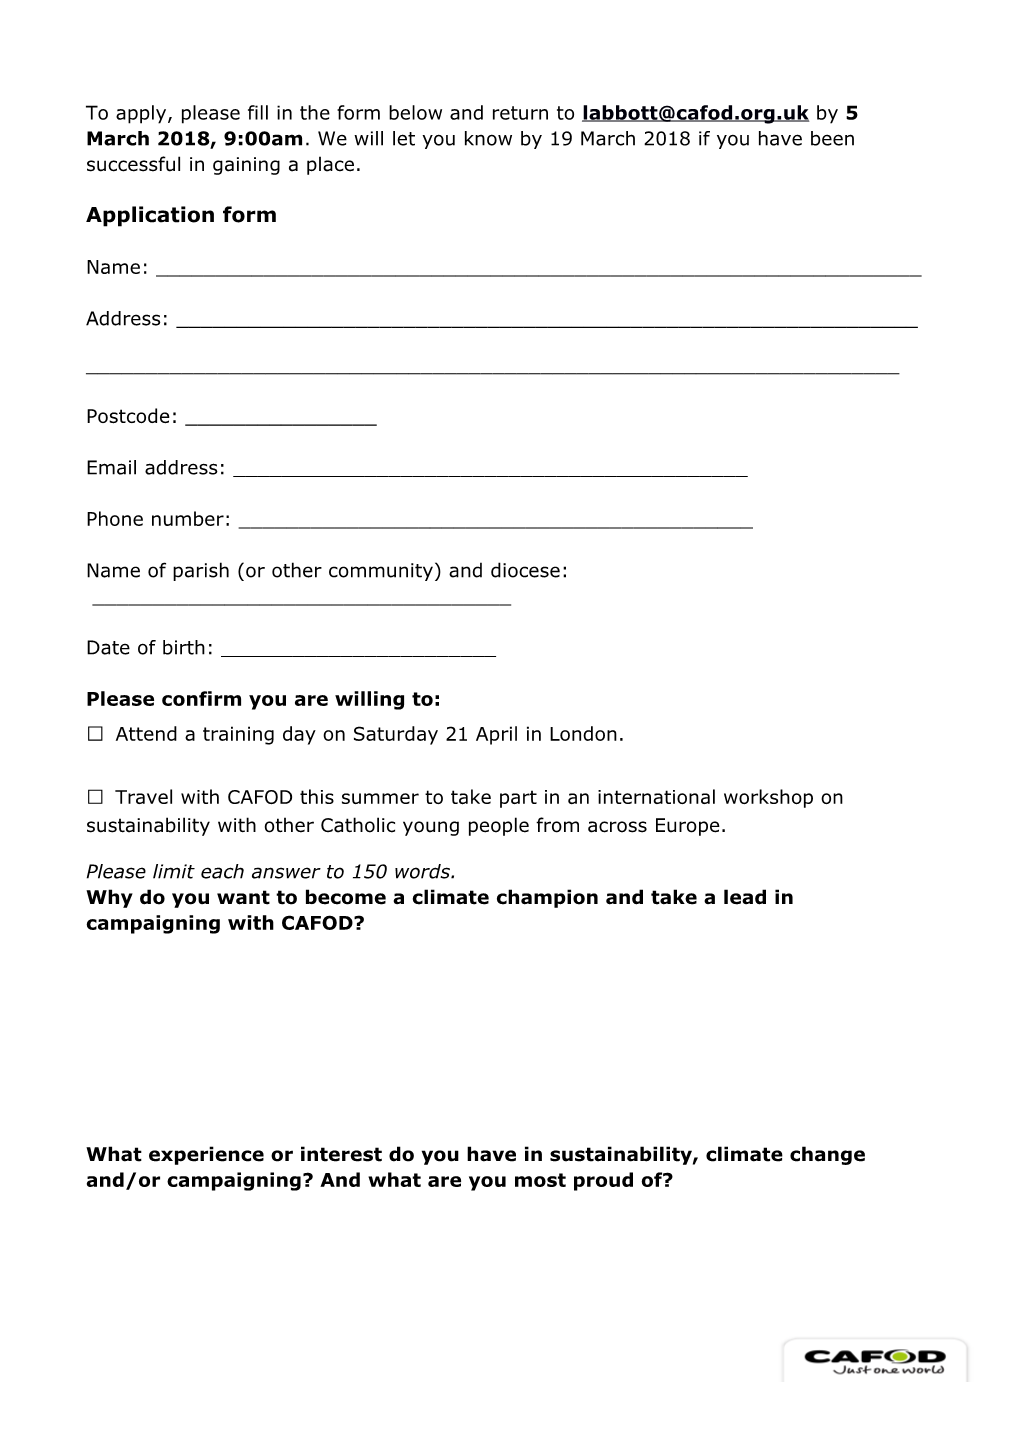 CAFOD Climate Champion Application Form